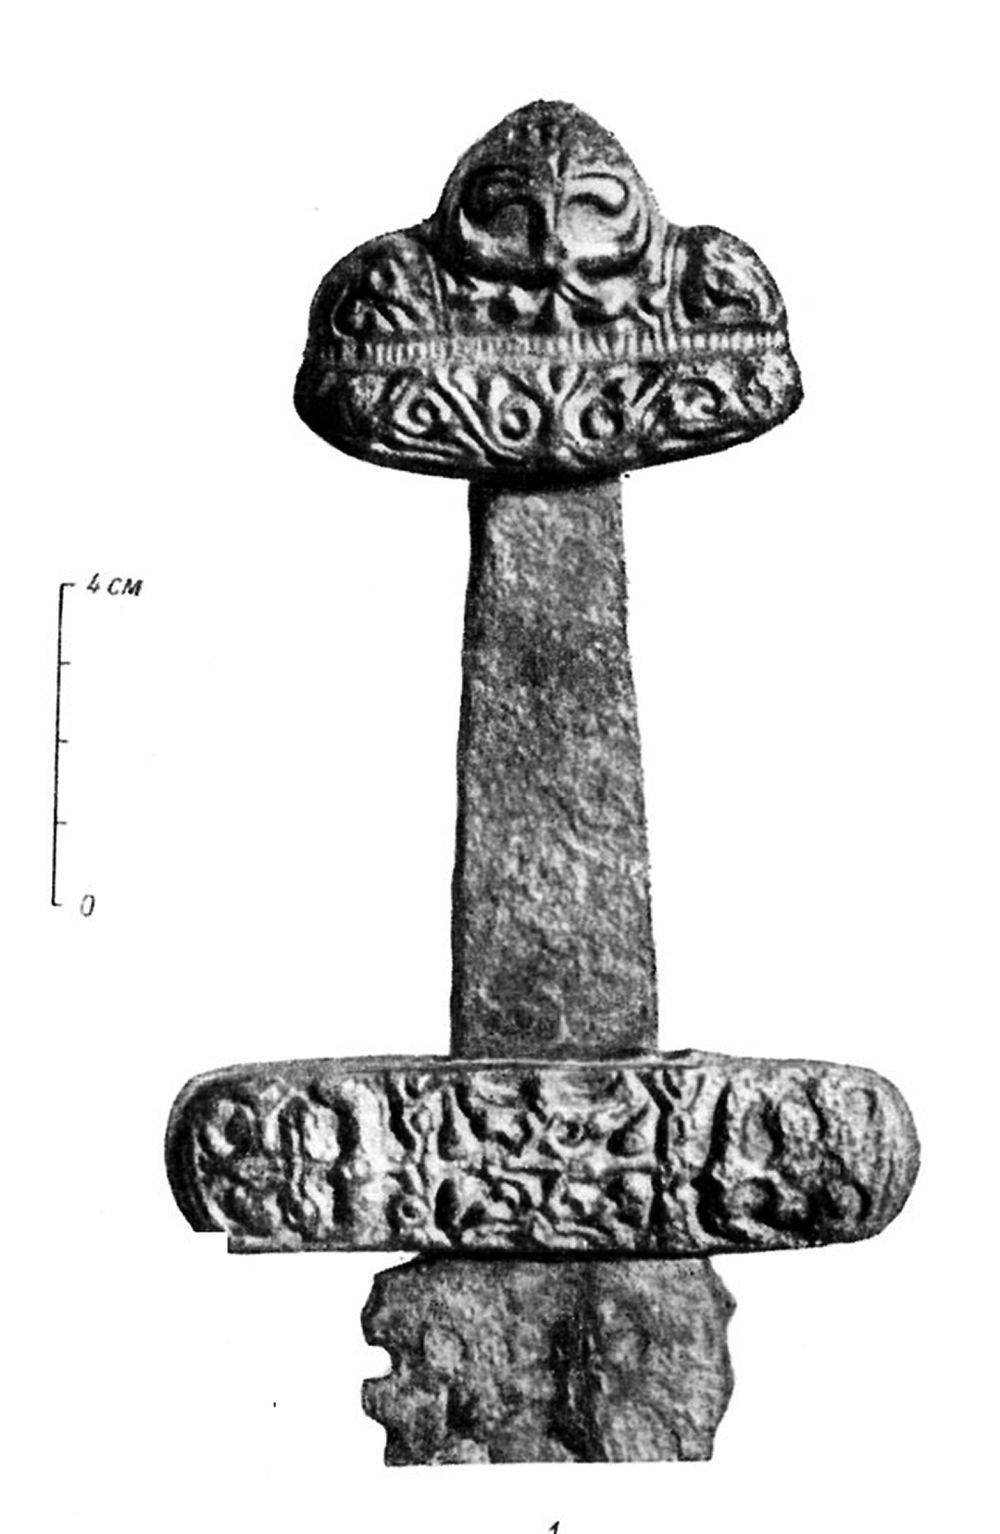 Later examples of Petersen type Viking swords